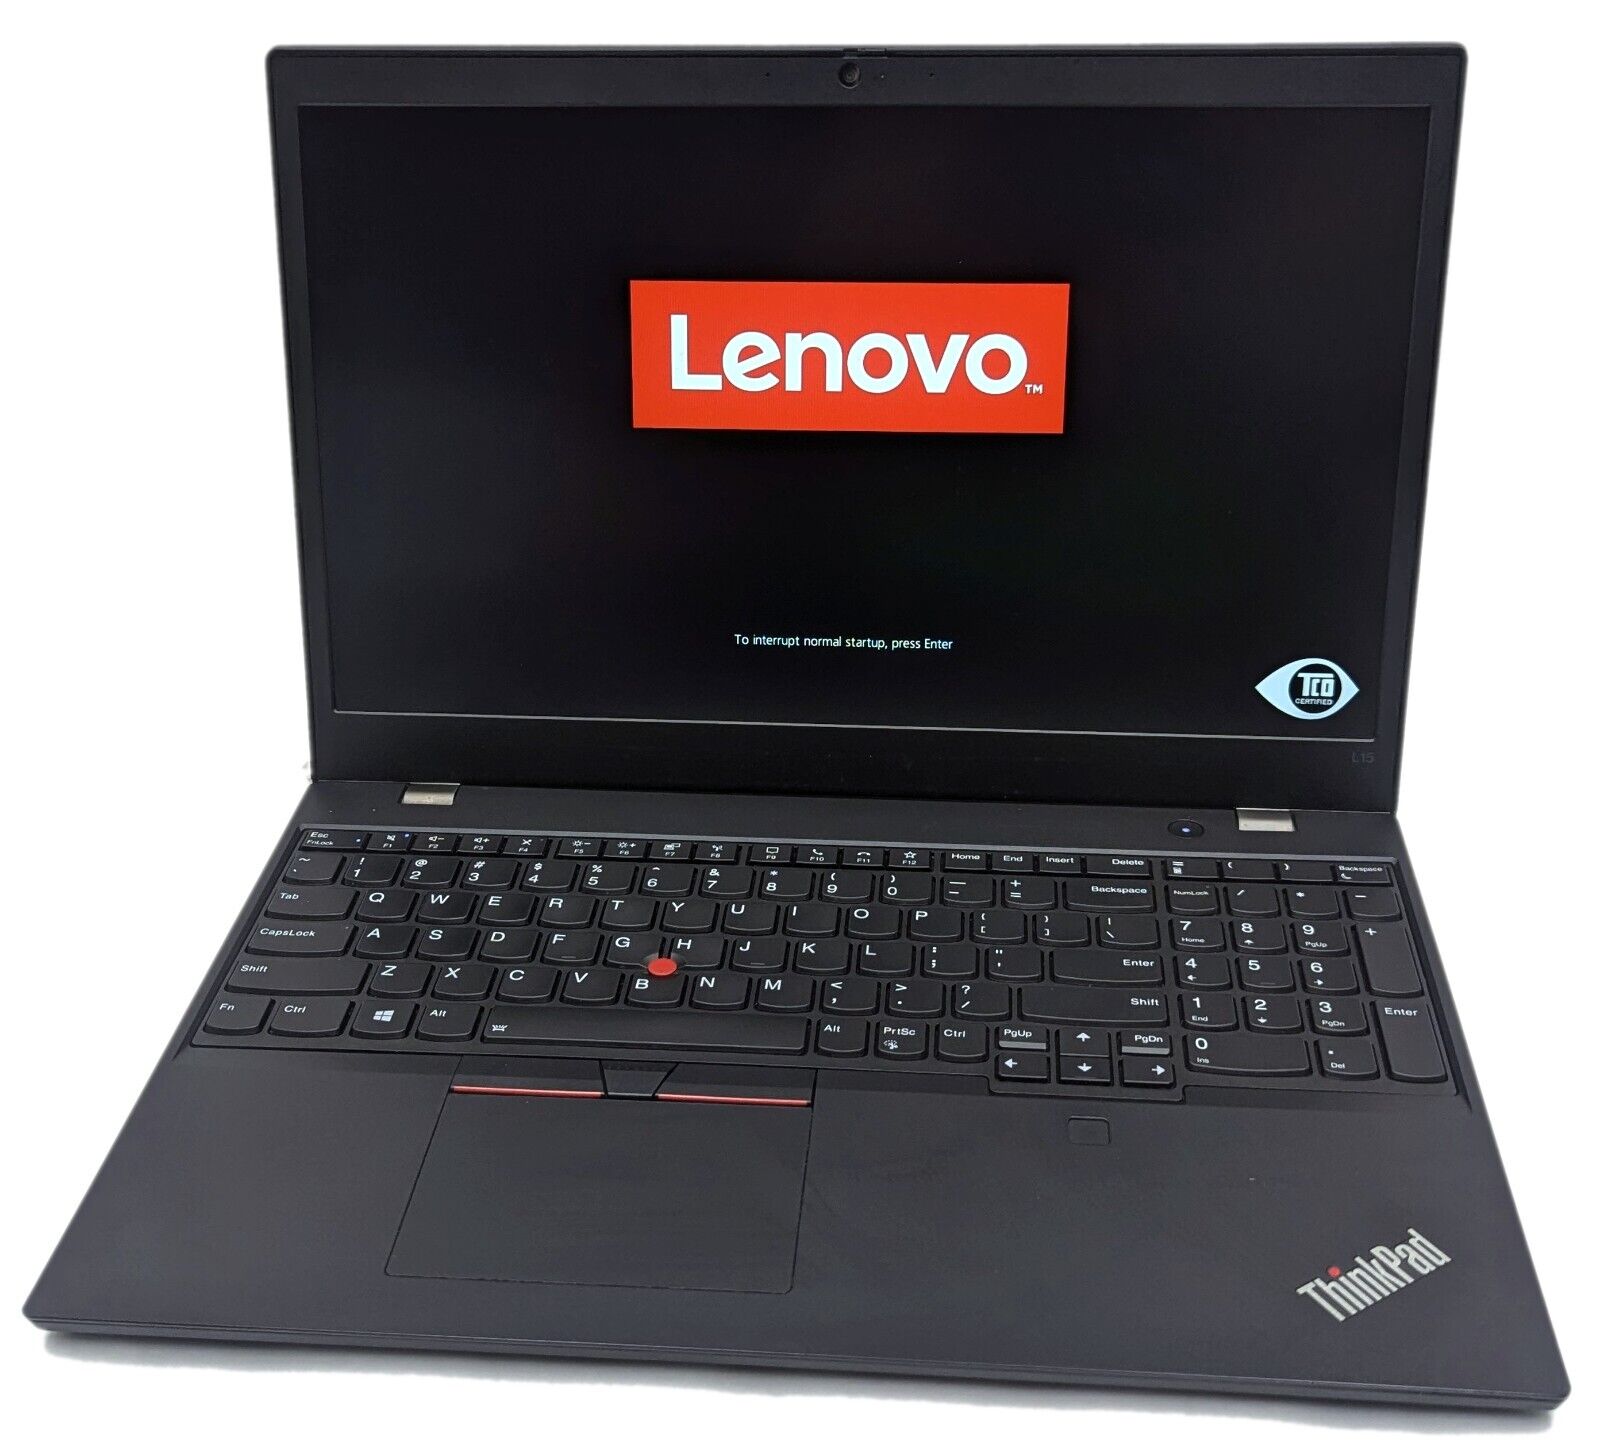 SCREEN ISSUE - Lenovo ThinkPad L15 15.6